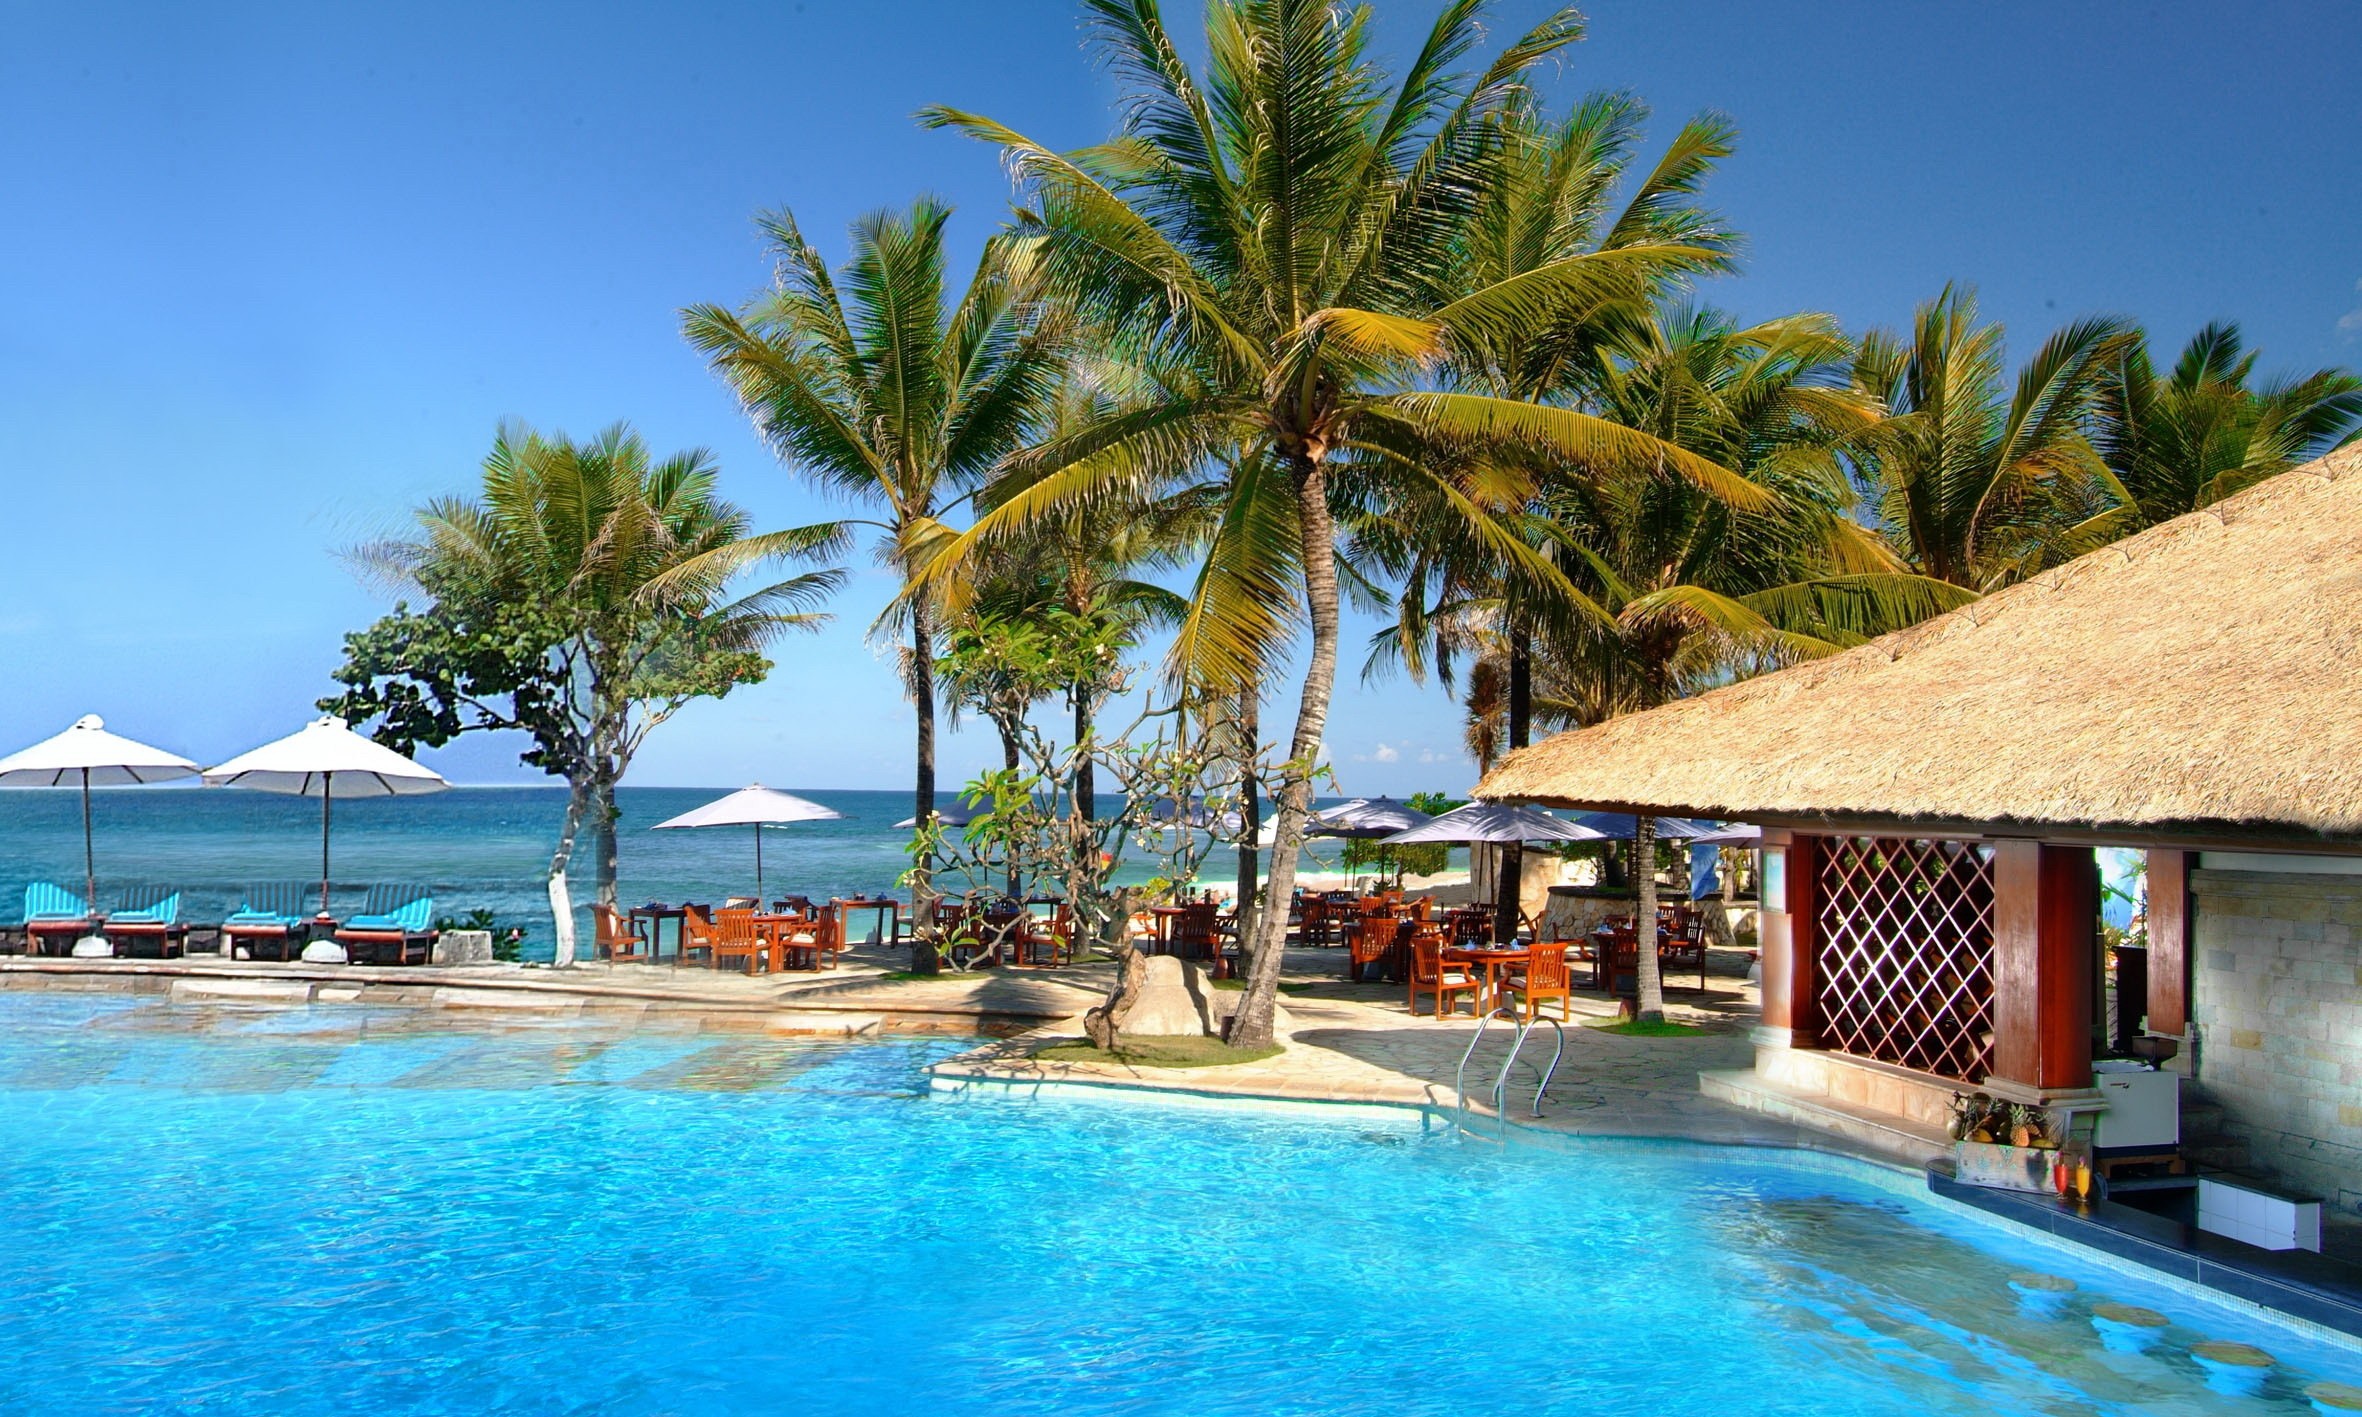 General 2362x1417 hotel palm trees swimming pool resort